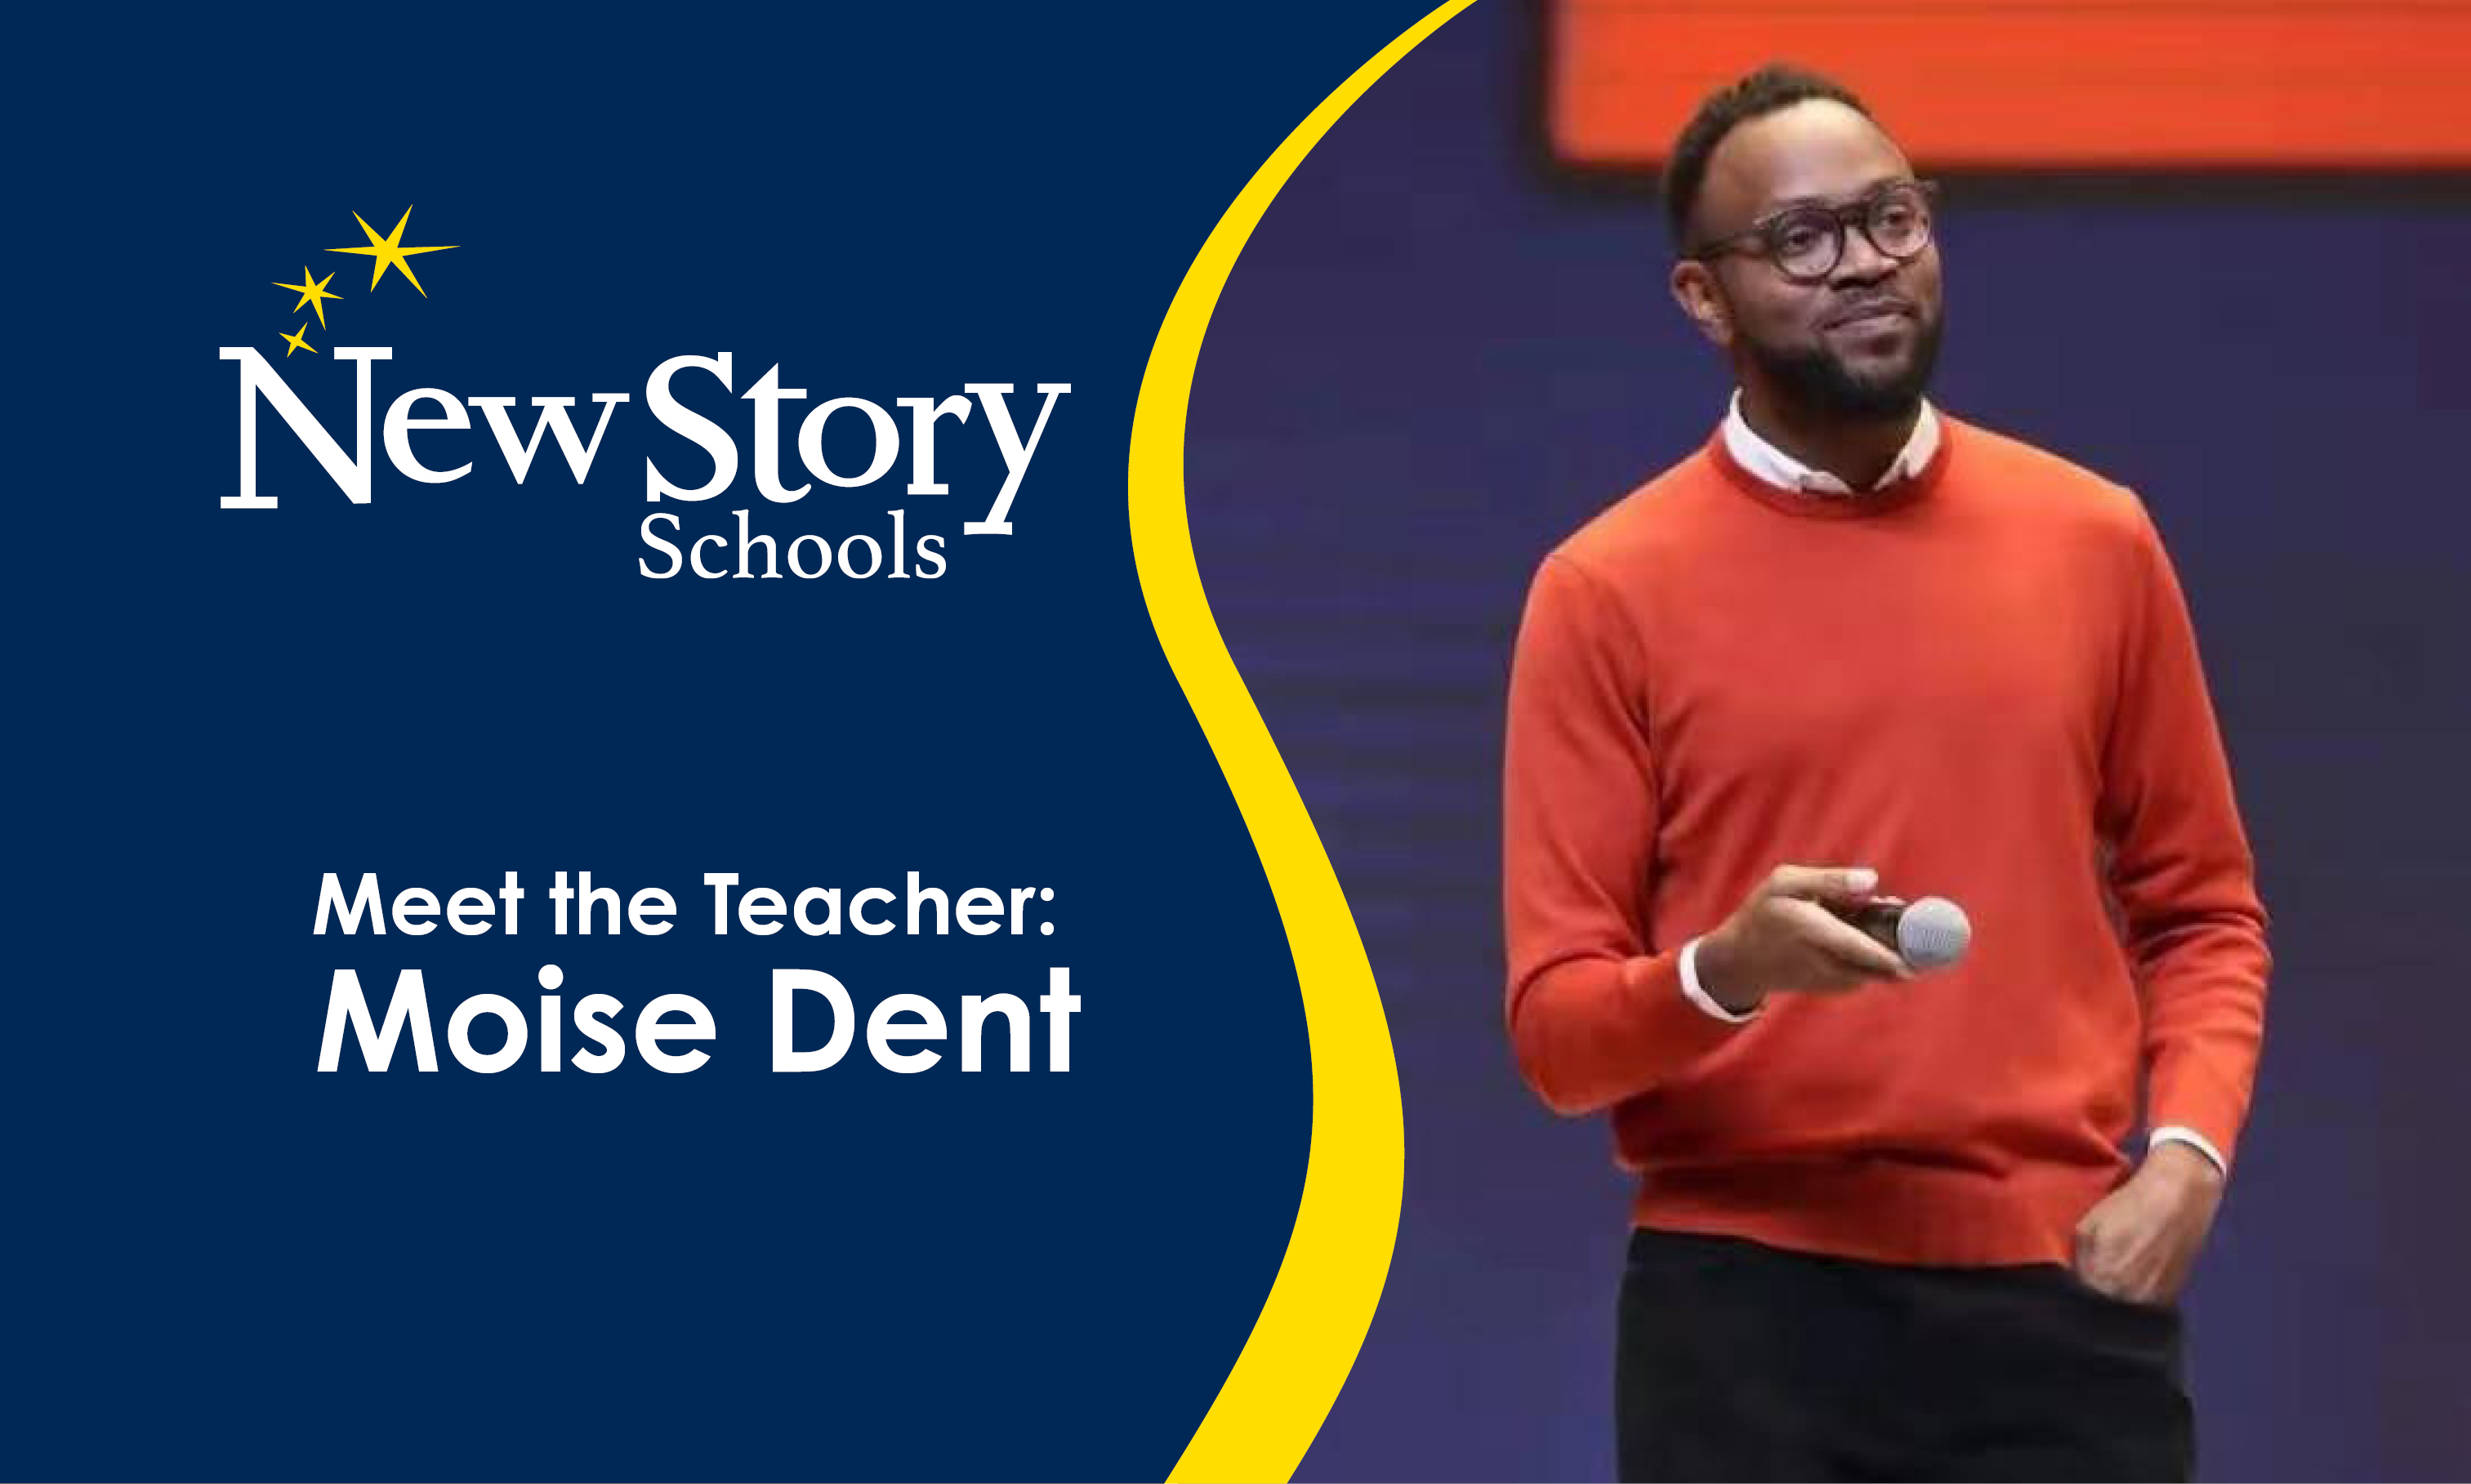 Meet the Teacher: Moise Dent